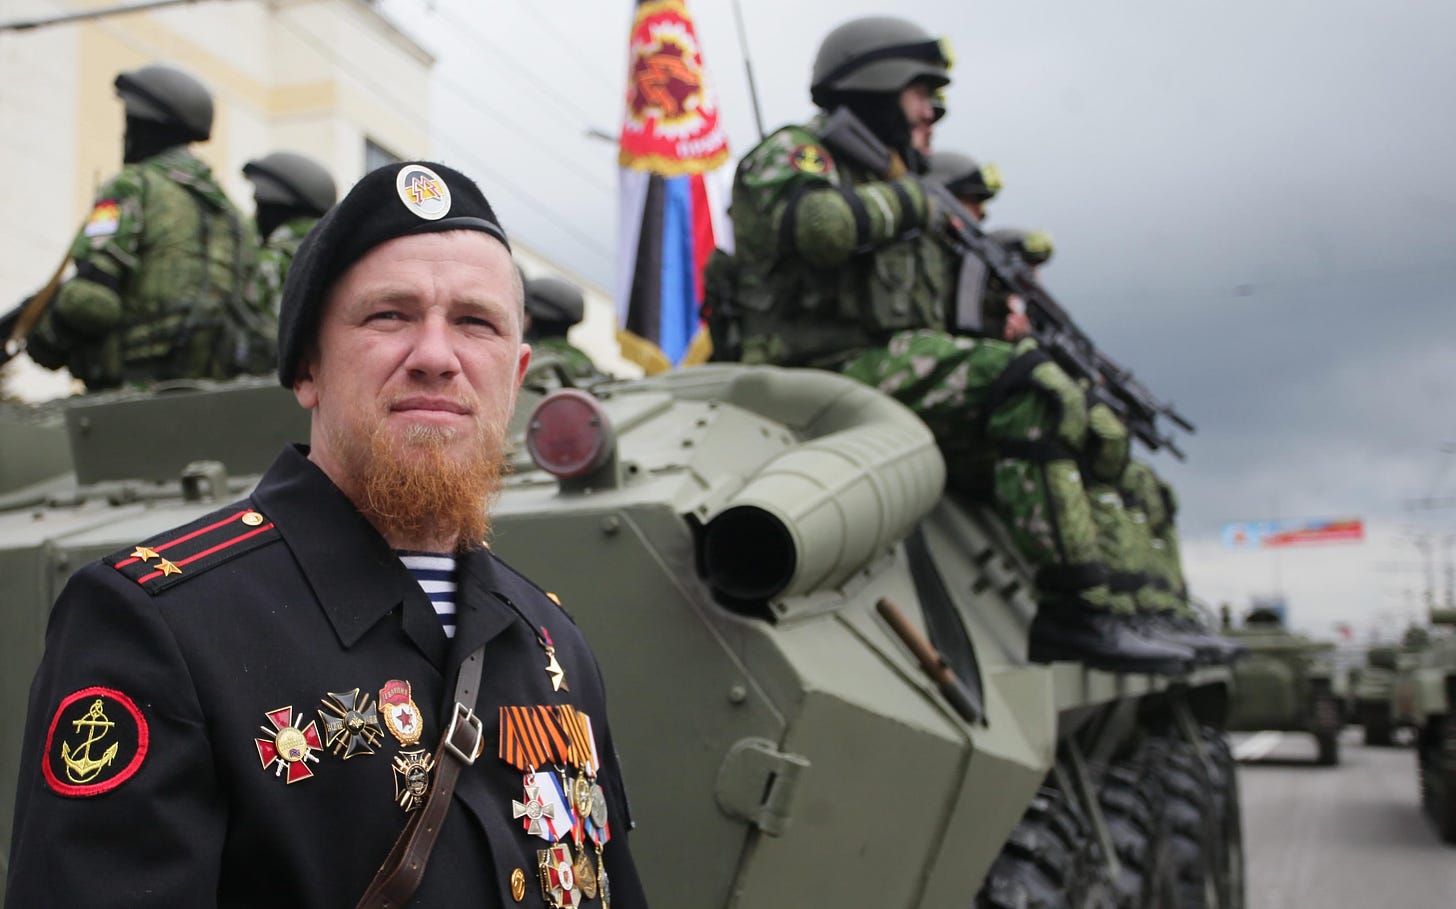 Declaration of war' in Ukraine as pro-Russian rebel commander Arseniy ' Motorola' Pavlov is assassinated in Donetsk lift bombing